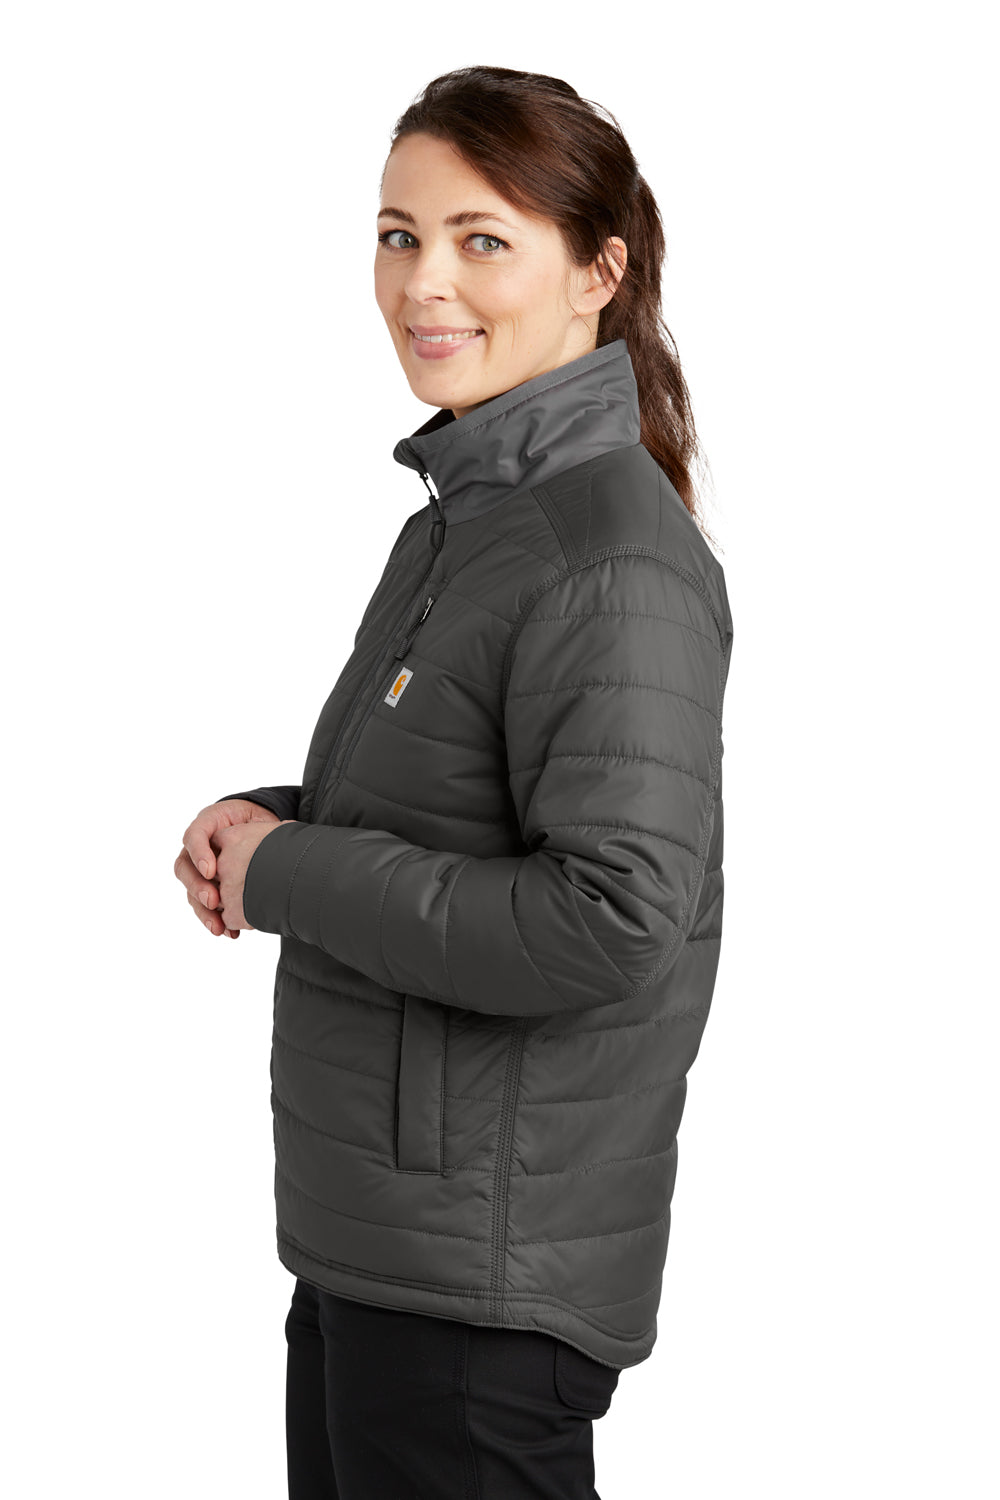 Carhartt CT104314 Womens Gilliam Wind & Water Resistant Full Zip Jacket Shadow Grey Model Side